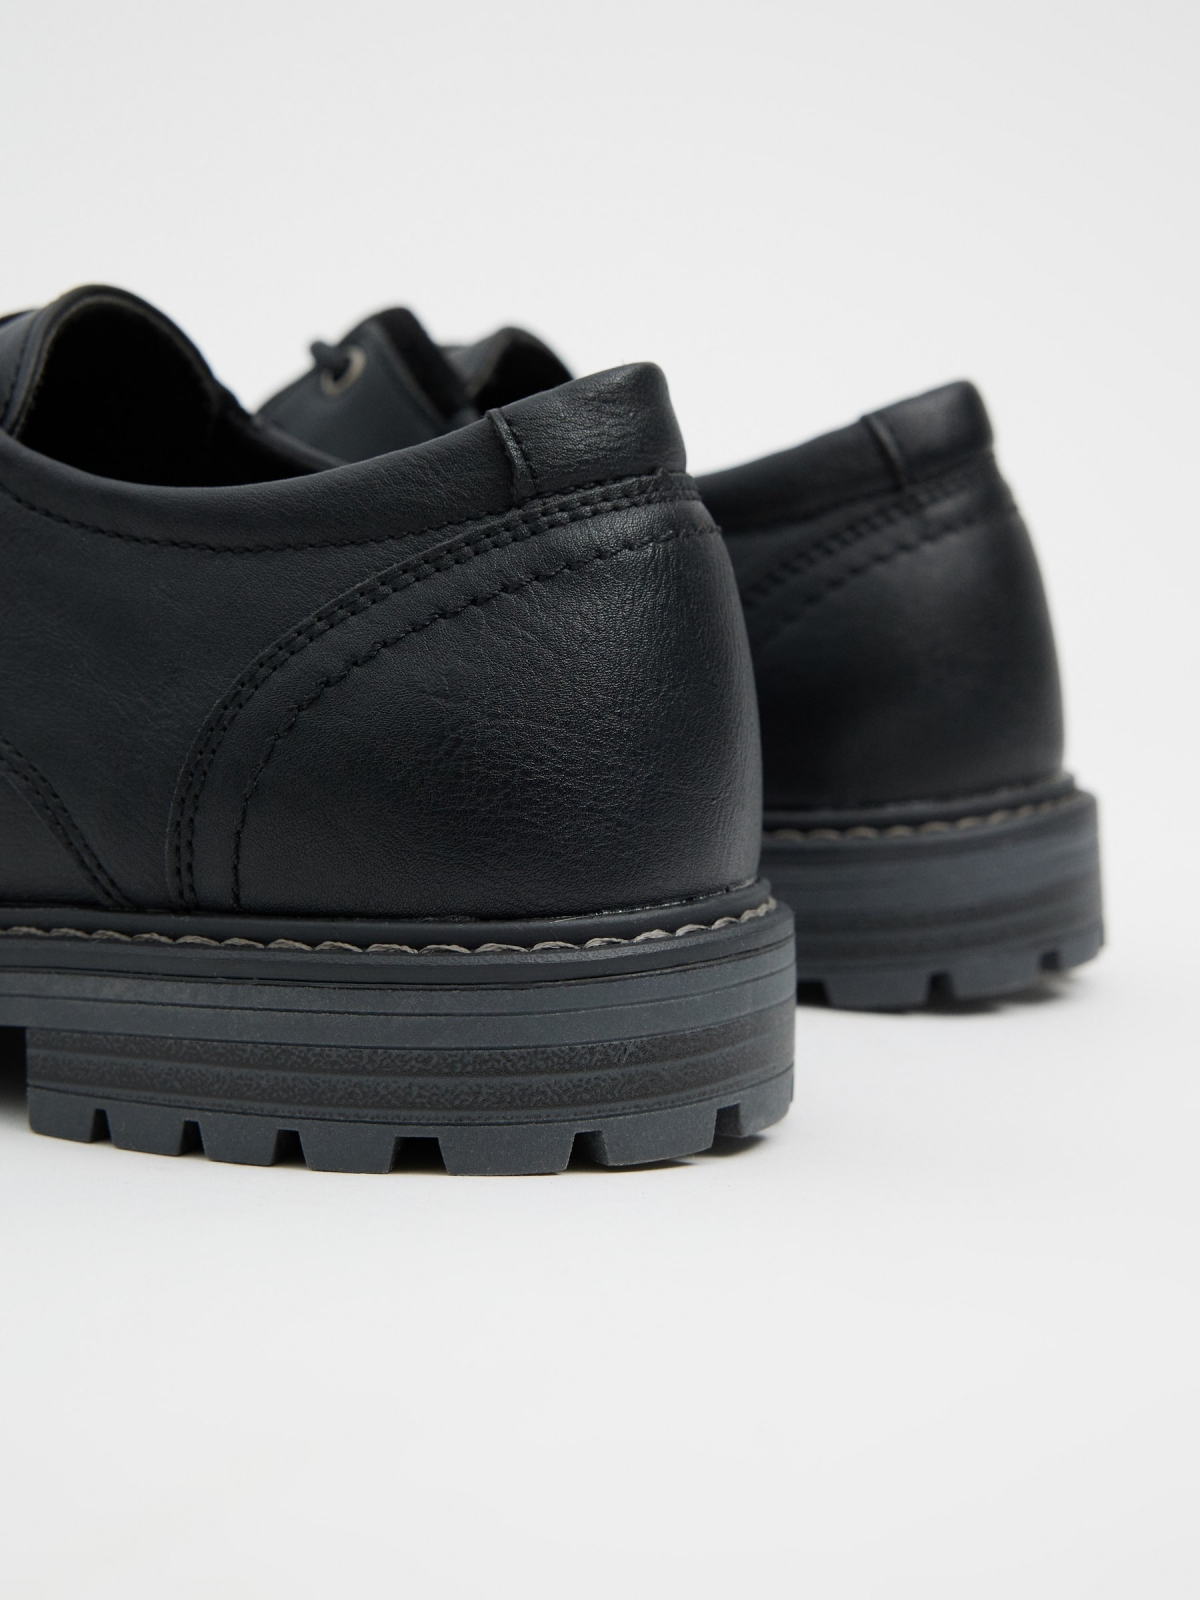 Sapato efeito couro preto preto vista detalhe